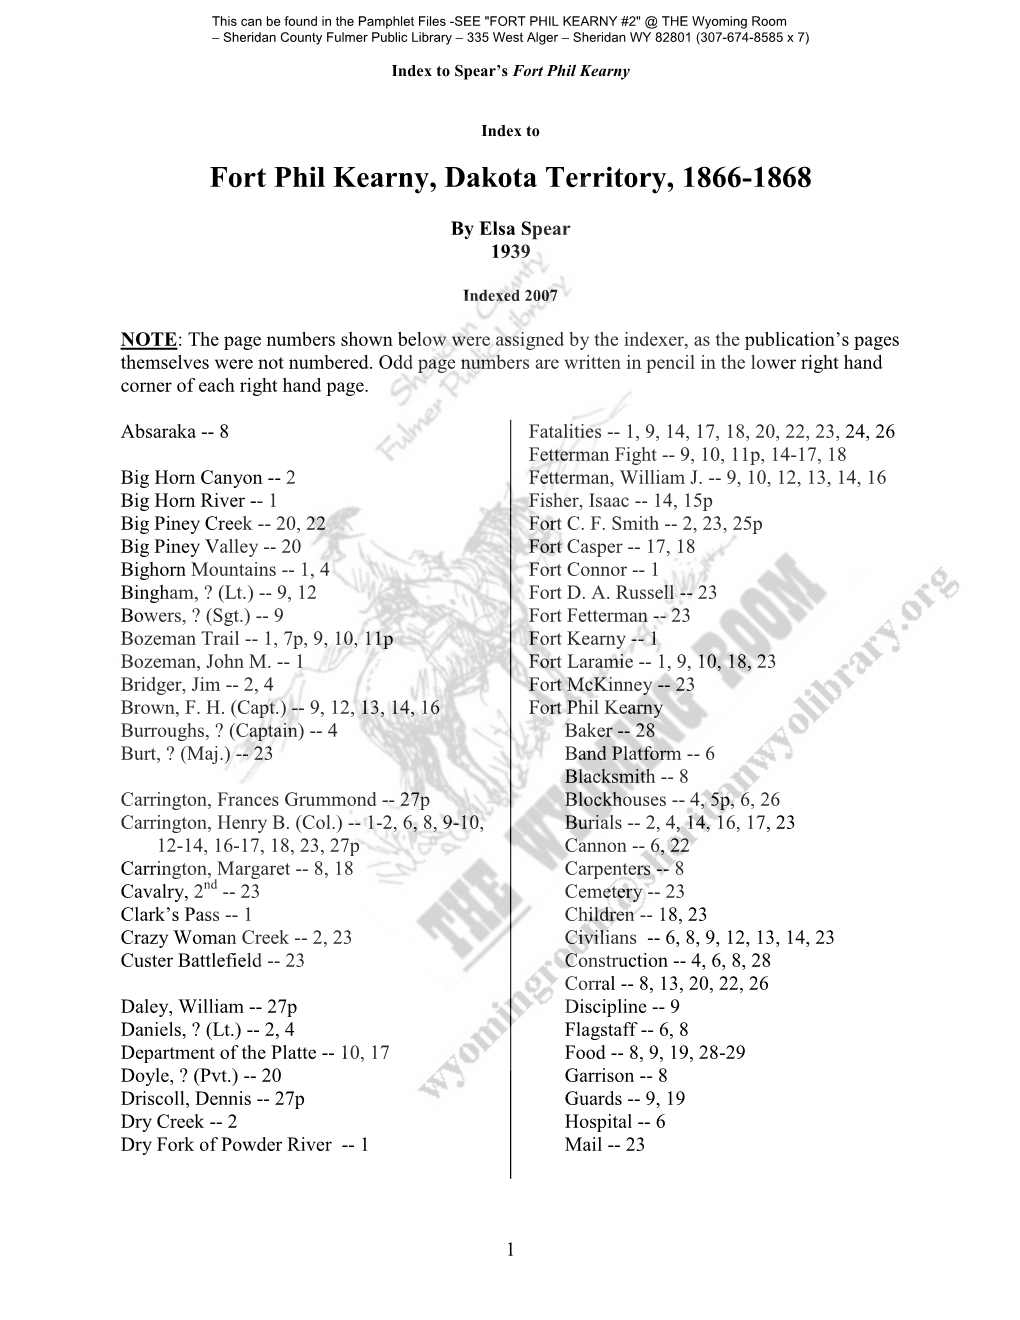 Fort Phil Kearny, Dakota Territory, 1866-1868